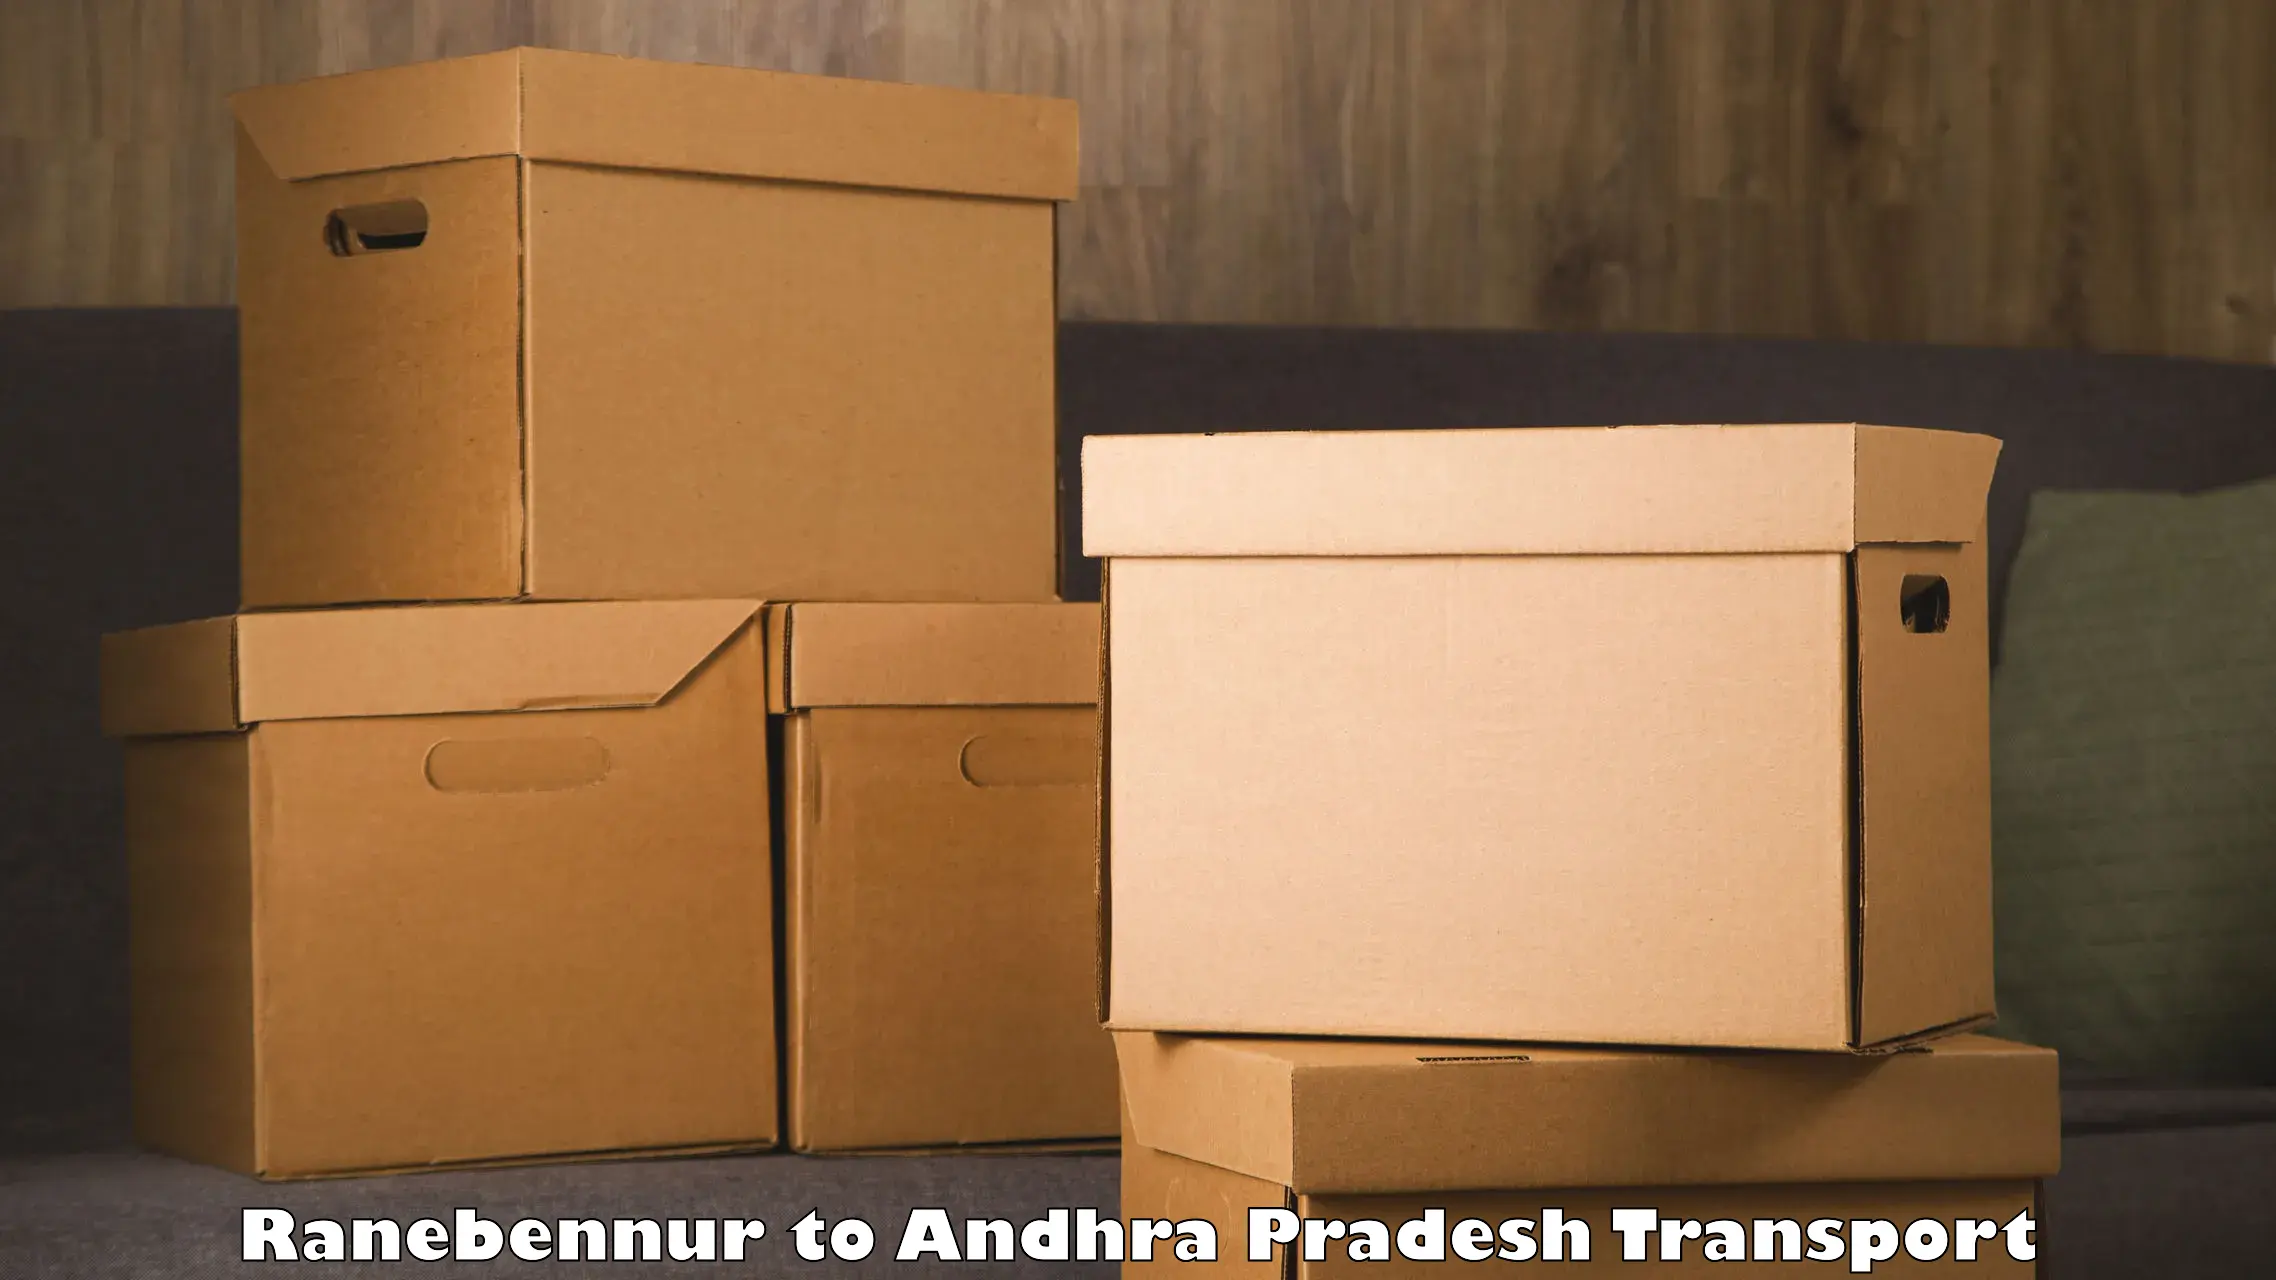 Truck transport companies in India Ranebennur to Andhra Pradesh